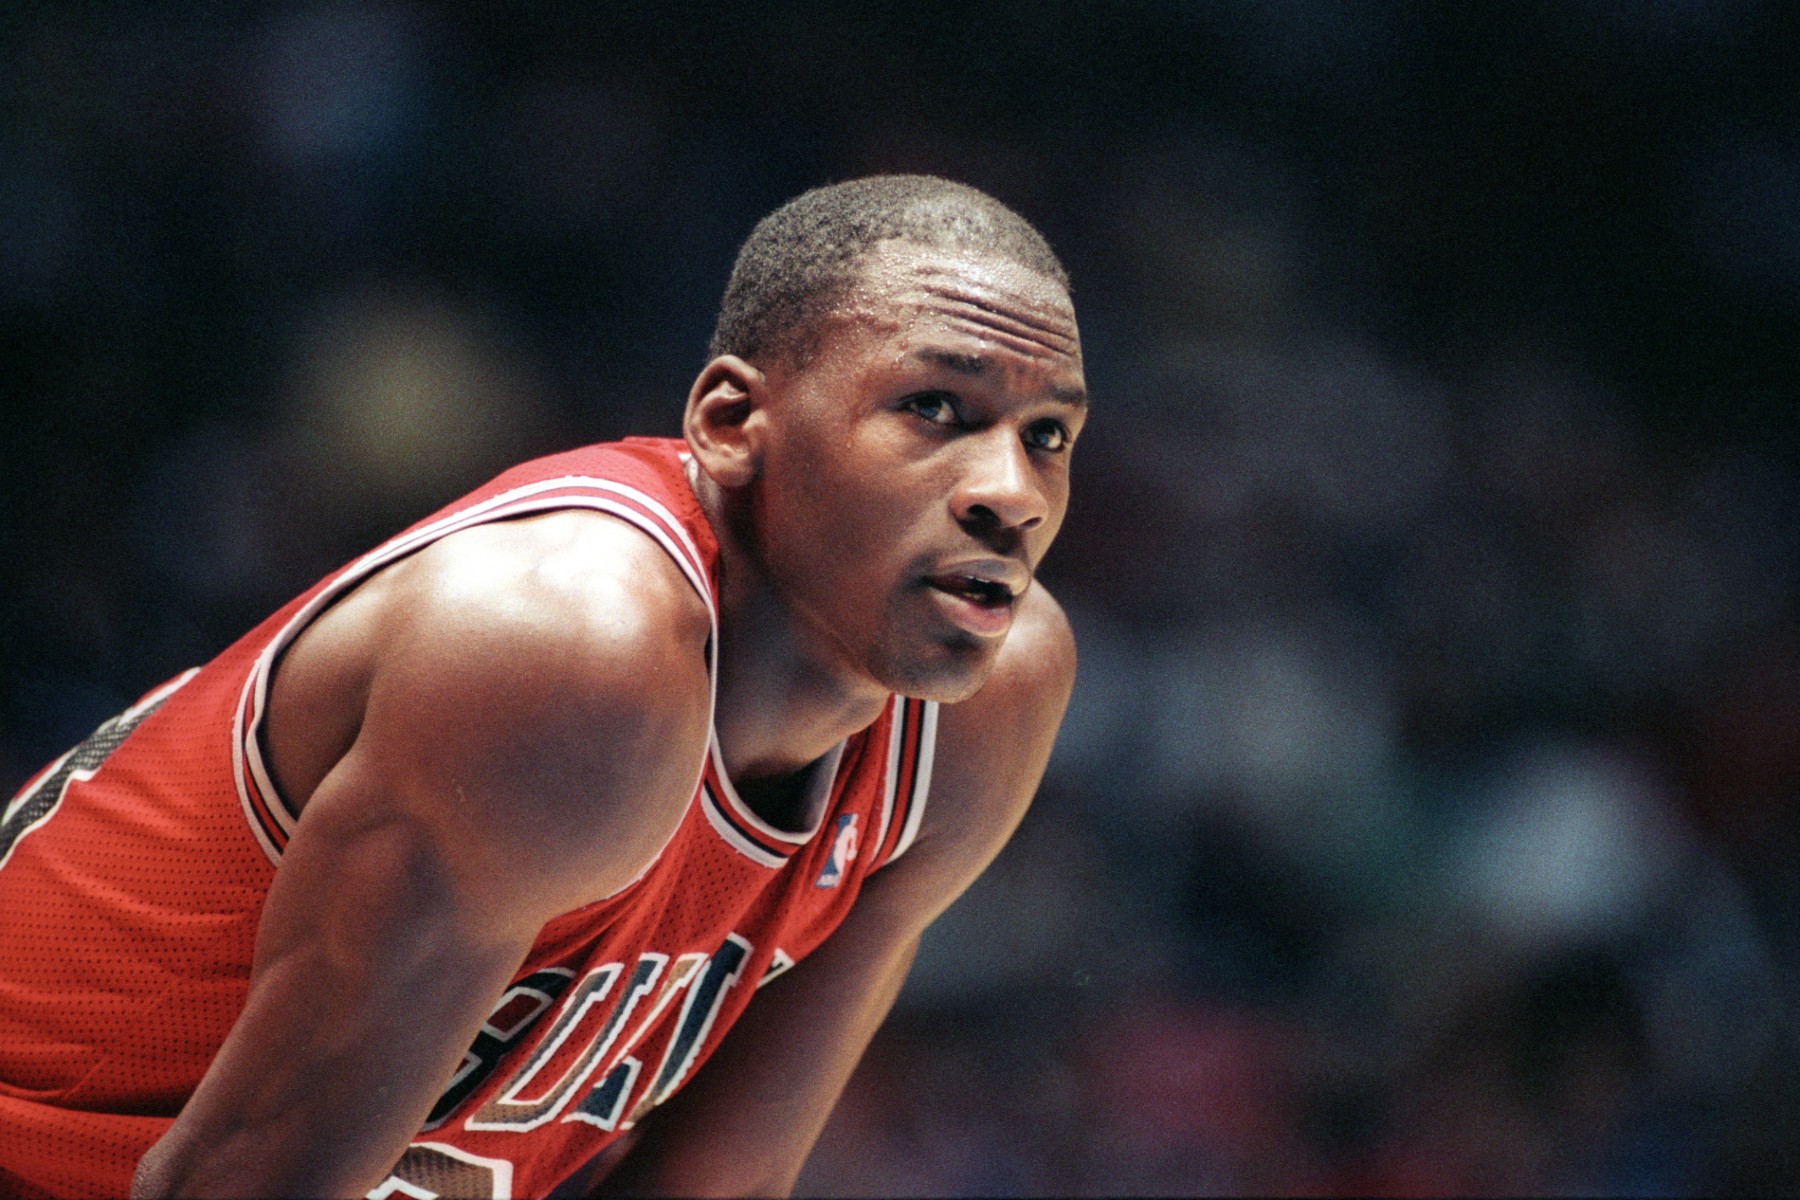 Michael Jordan wearing his famous Chicago Bulls #23. Getty/Tom Berg/Wire Image